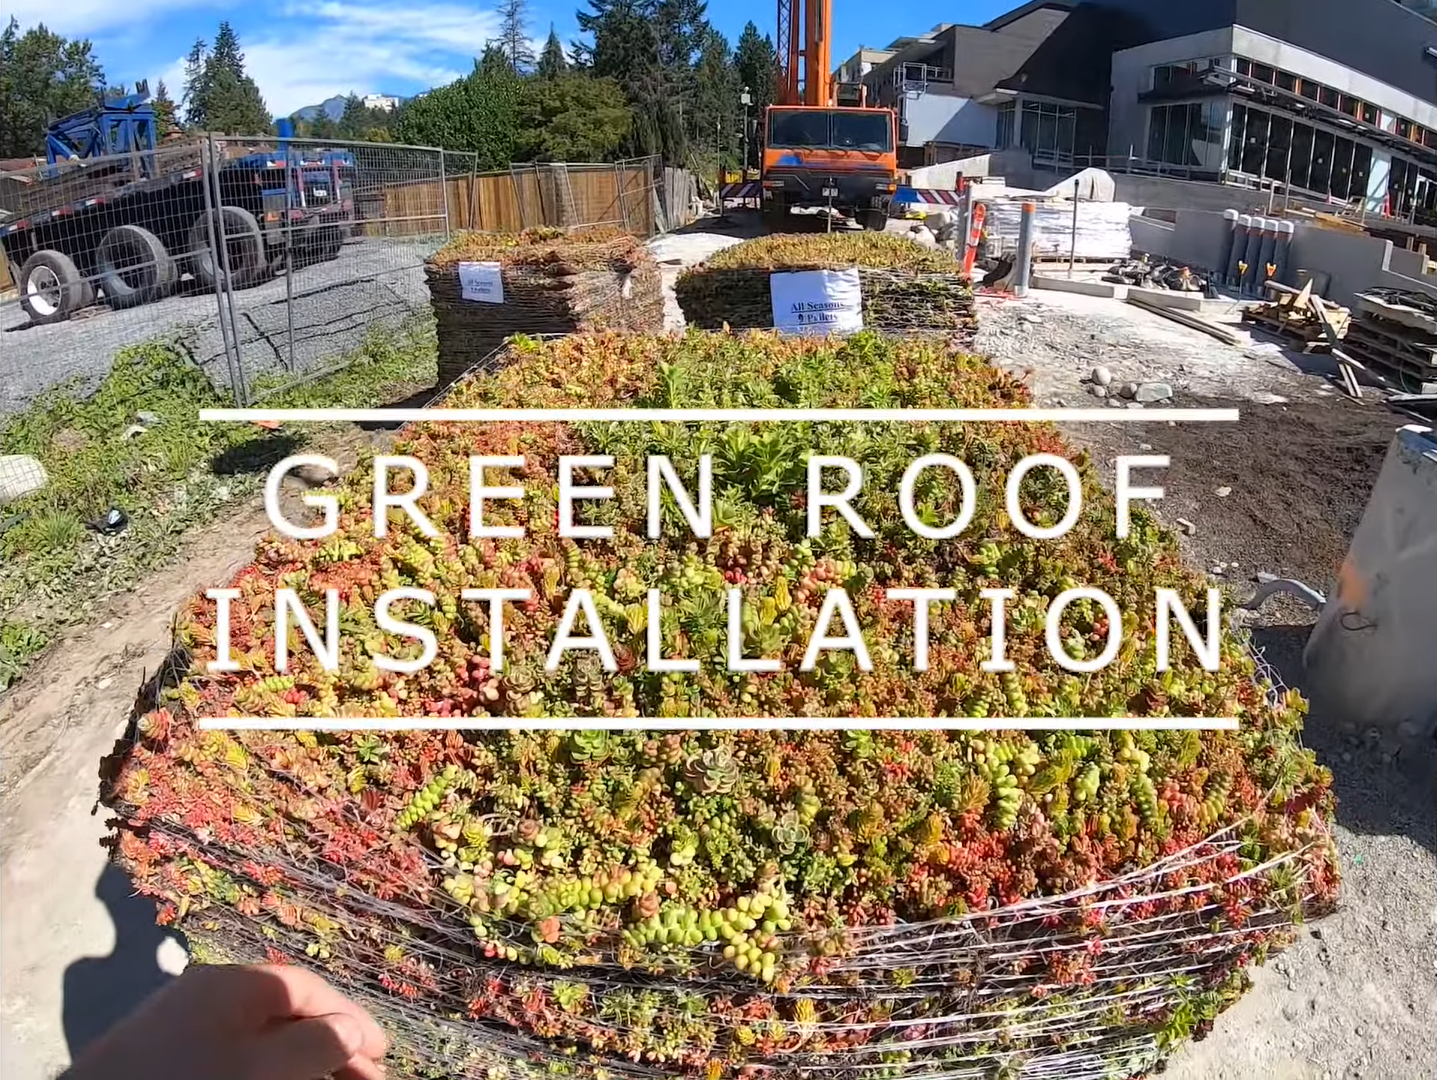 North by Northwest Green roof installation